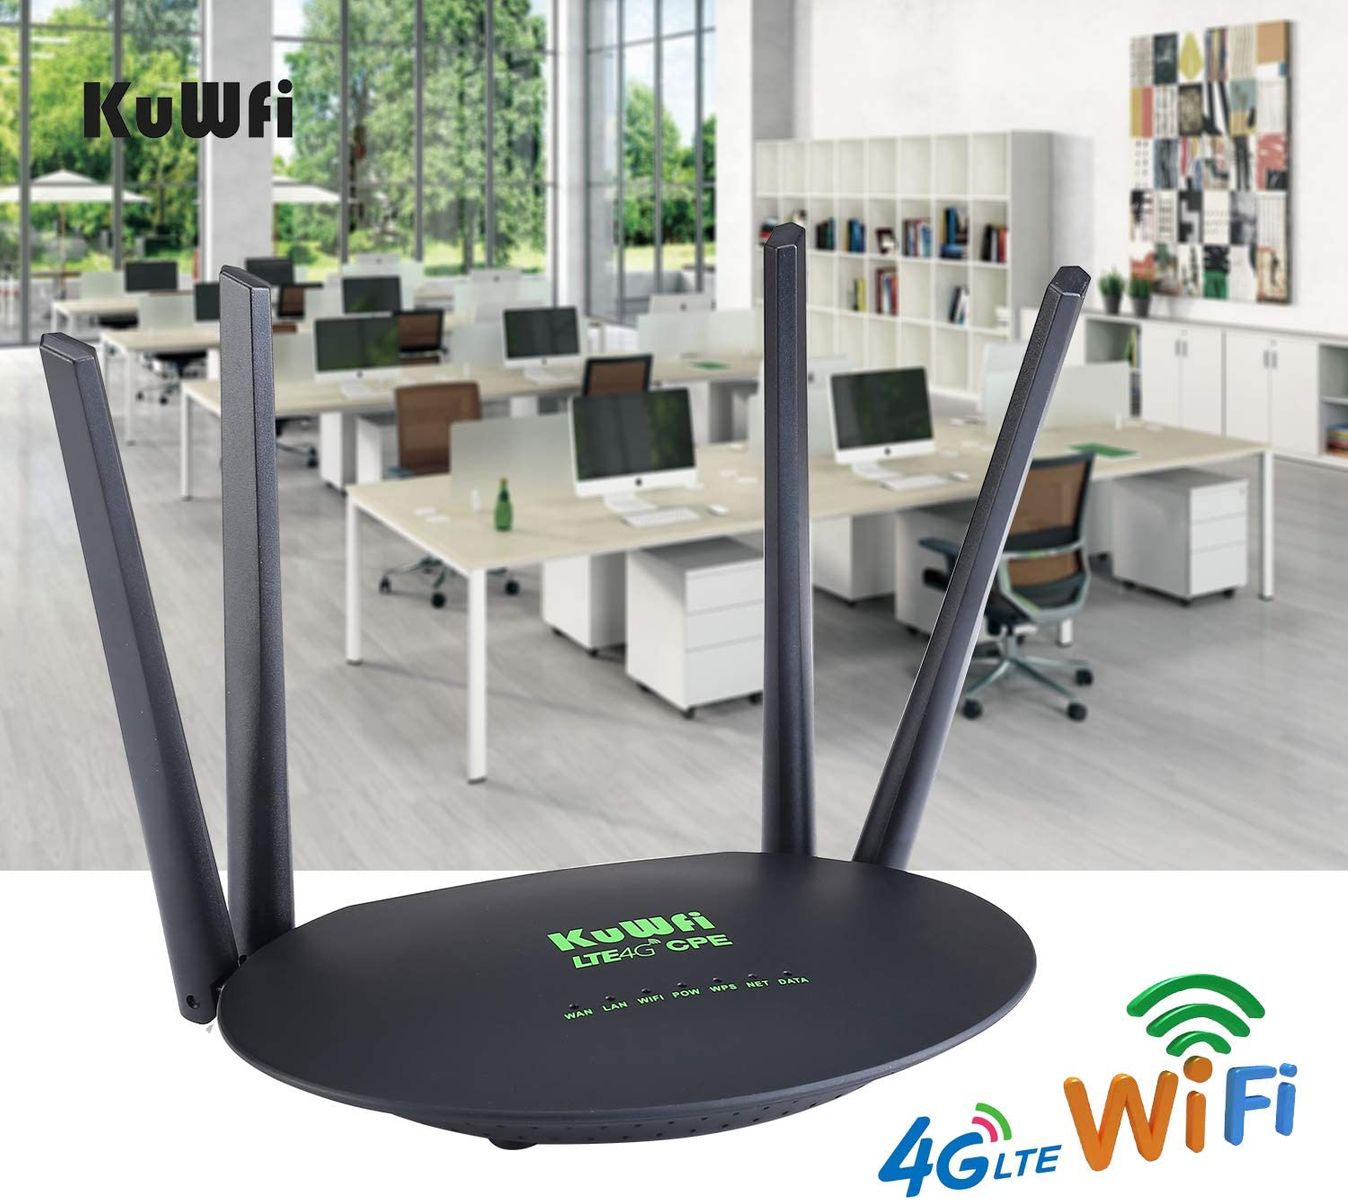 KuWFi Router 4G LTE WLAN CPE 4G LTE entsperrt 300 Mbit/s Slot für SIM-Karte 4 Stück leistungsstarke WiFi-Antenne nicht abnehmbar Cat4 150 Mbps Wi-Fi teilen 32 Benutzer